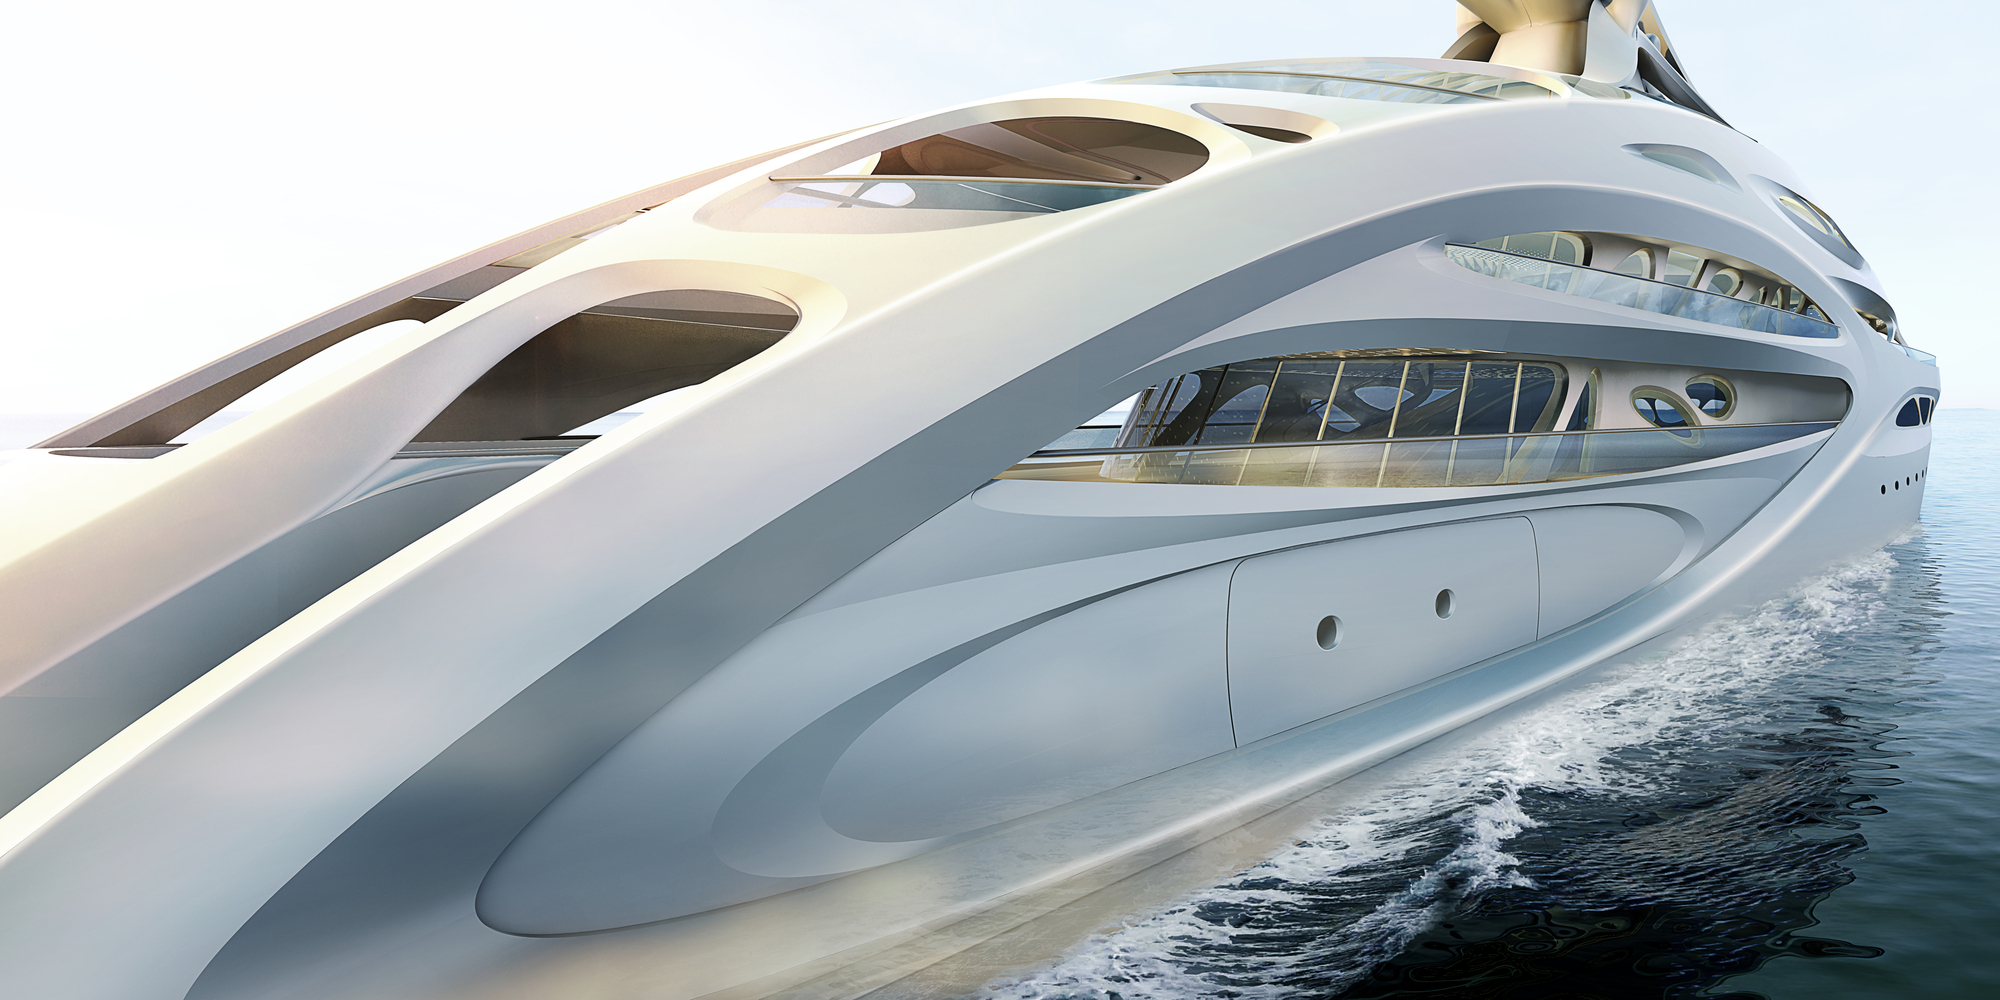 Yacht Project Jazz Blohm+Voss architect Zaha Hadid design